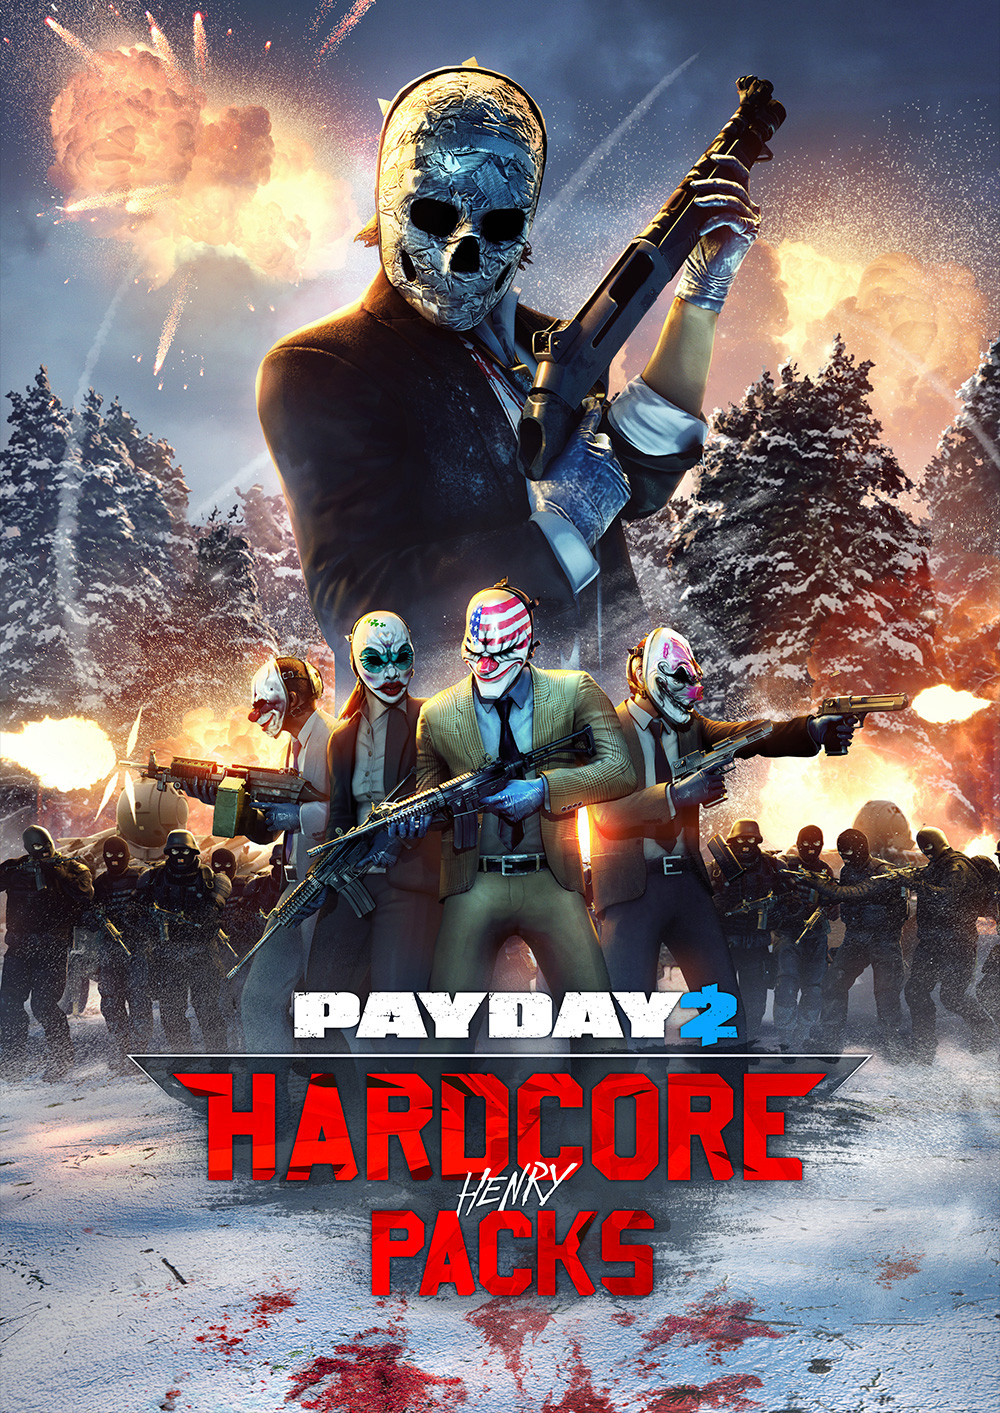 Payday 2 Hardcore Henry Packs Jimmy Safe Overkill Software